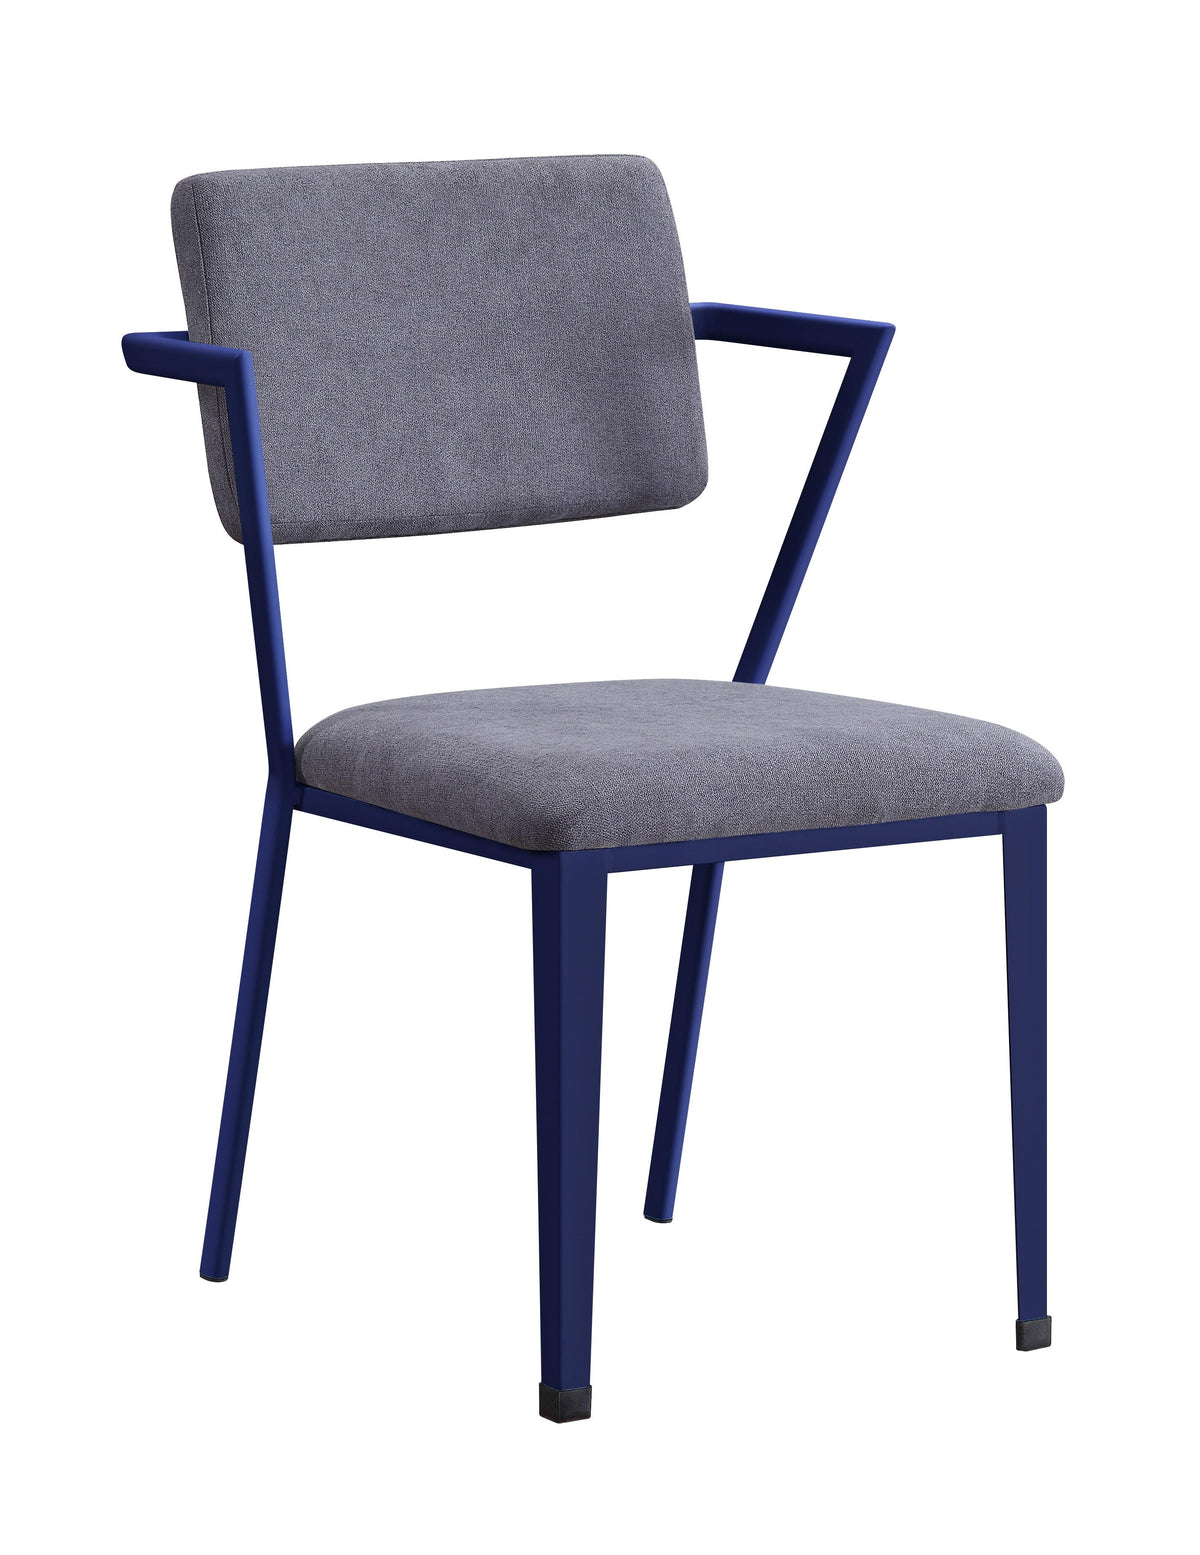 Cargo Gray Fabric & Blue Chair  Las Vegas Furniture Stores